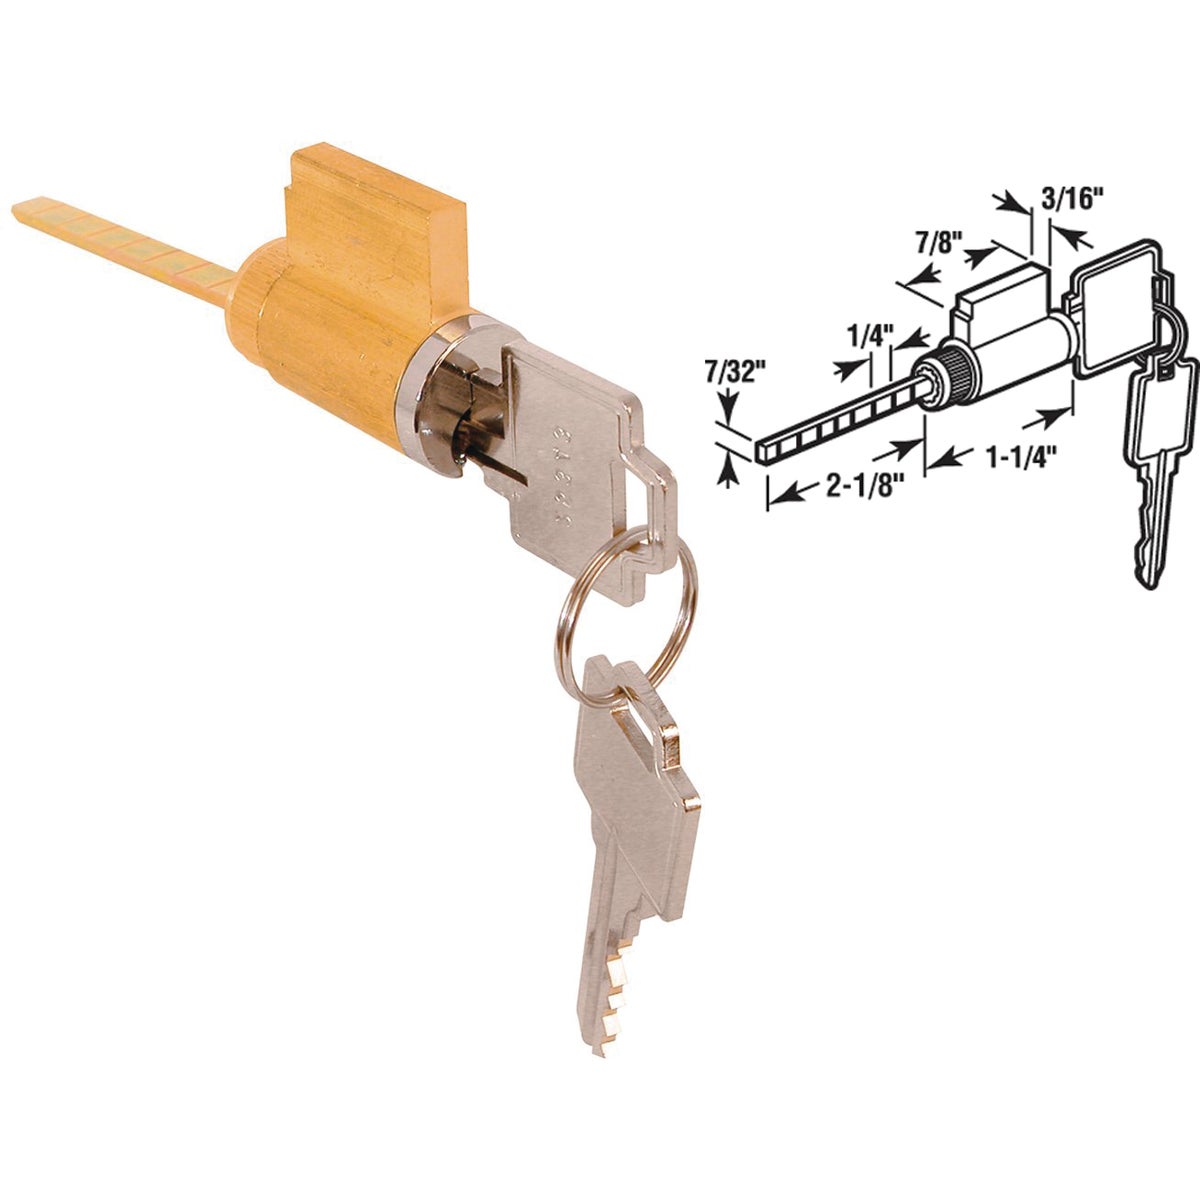 Item 206865, Sliding glass door keyed cylinder lock. 5-pin tumbler lock with 2 keys.